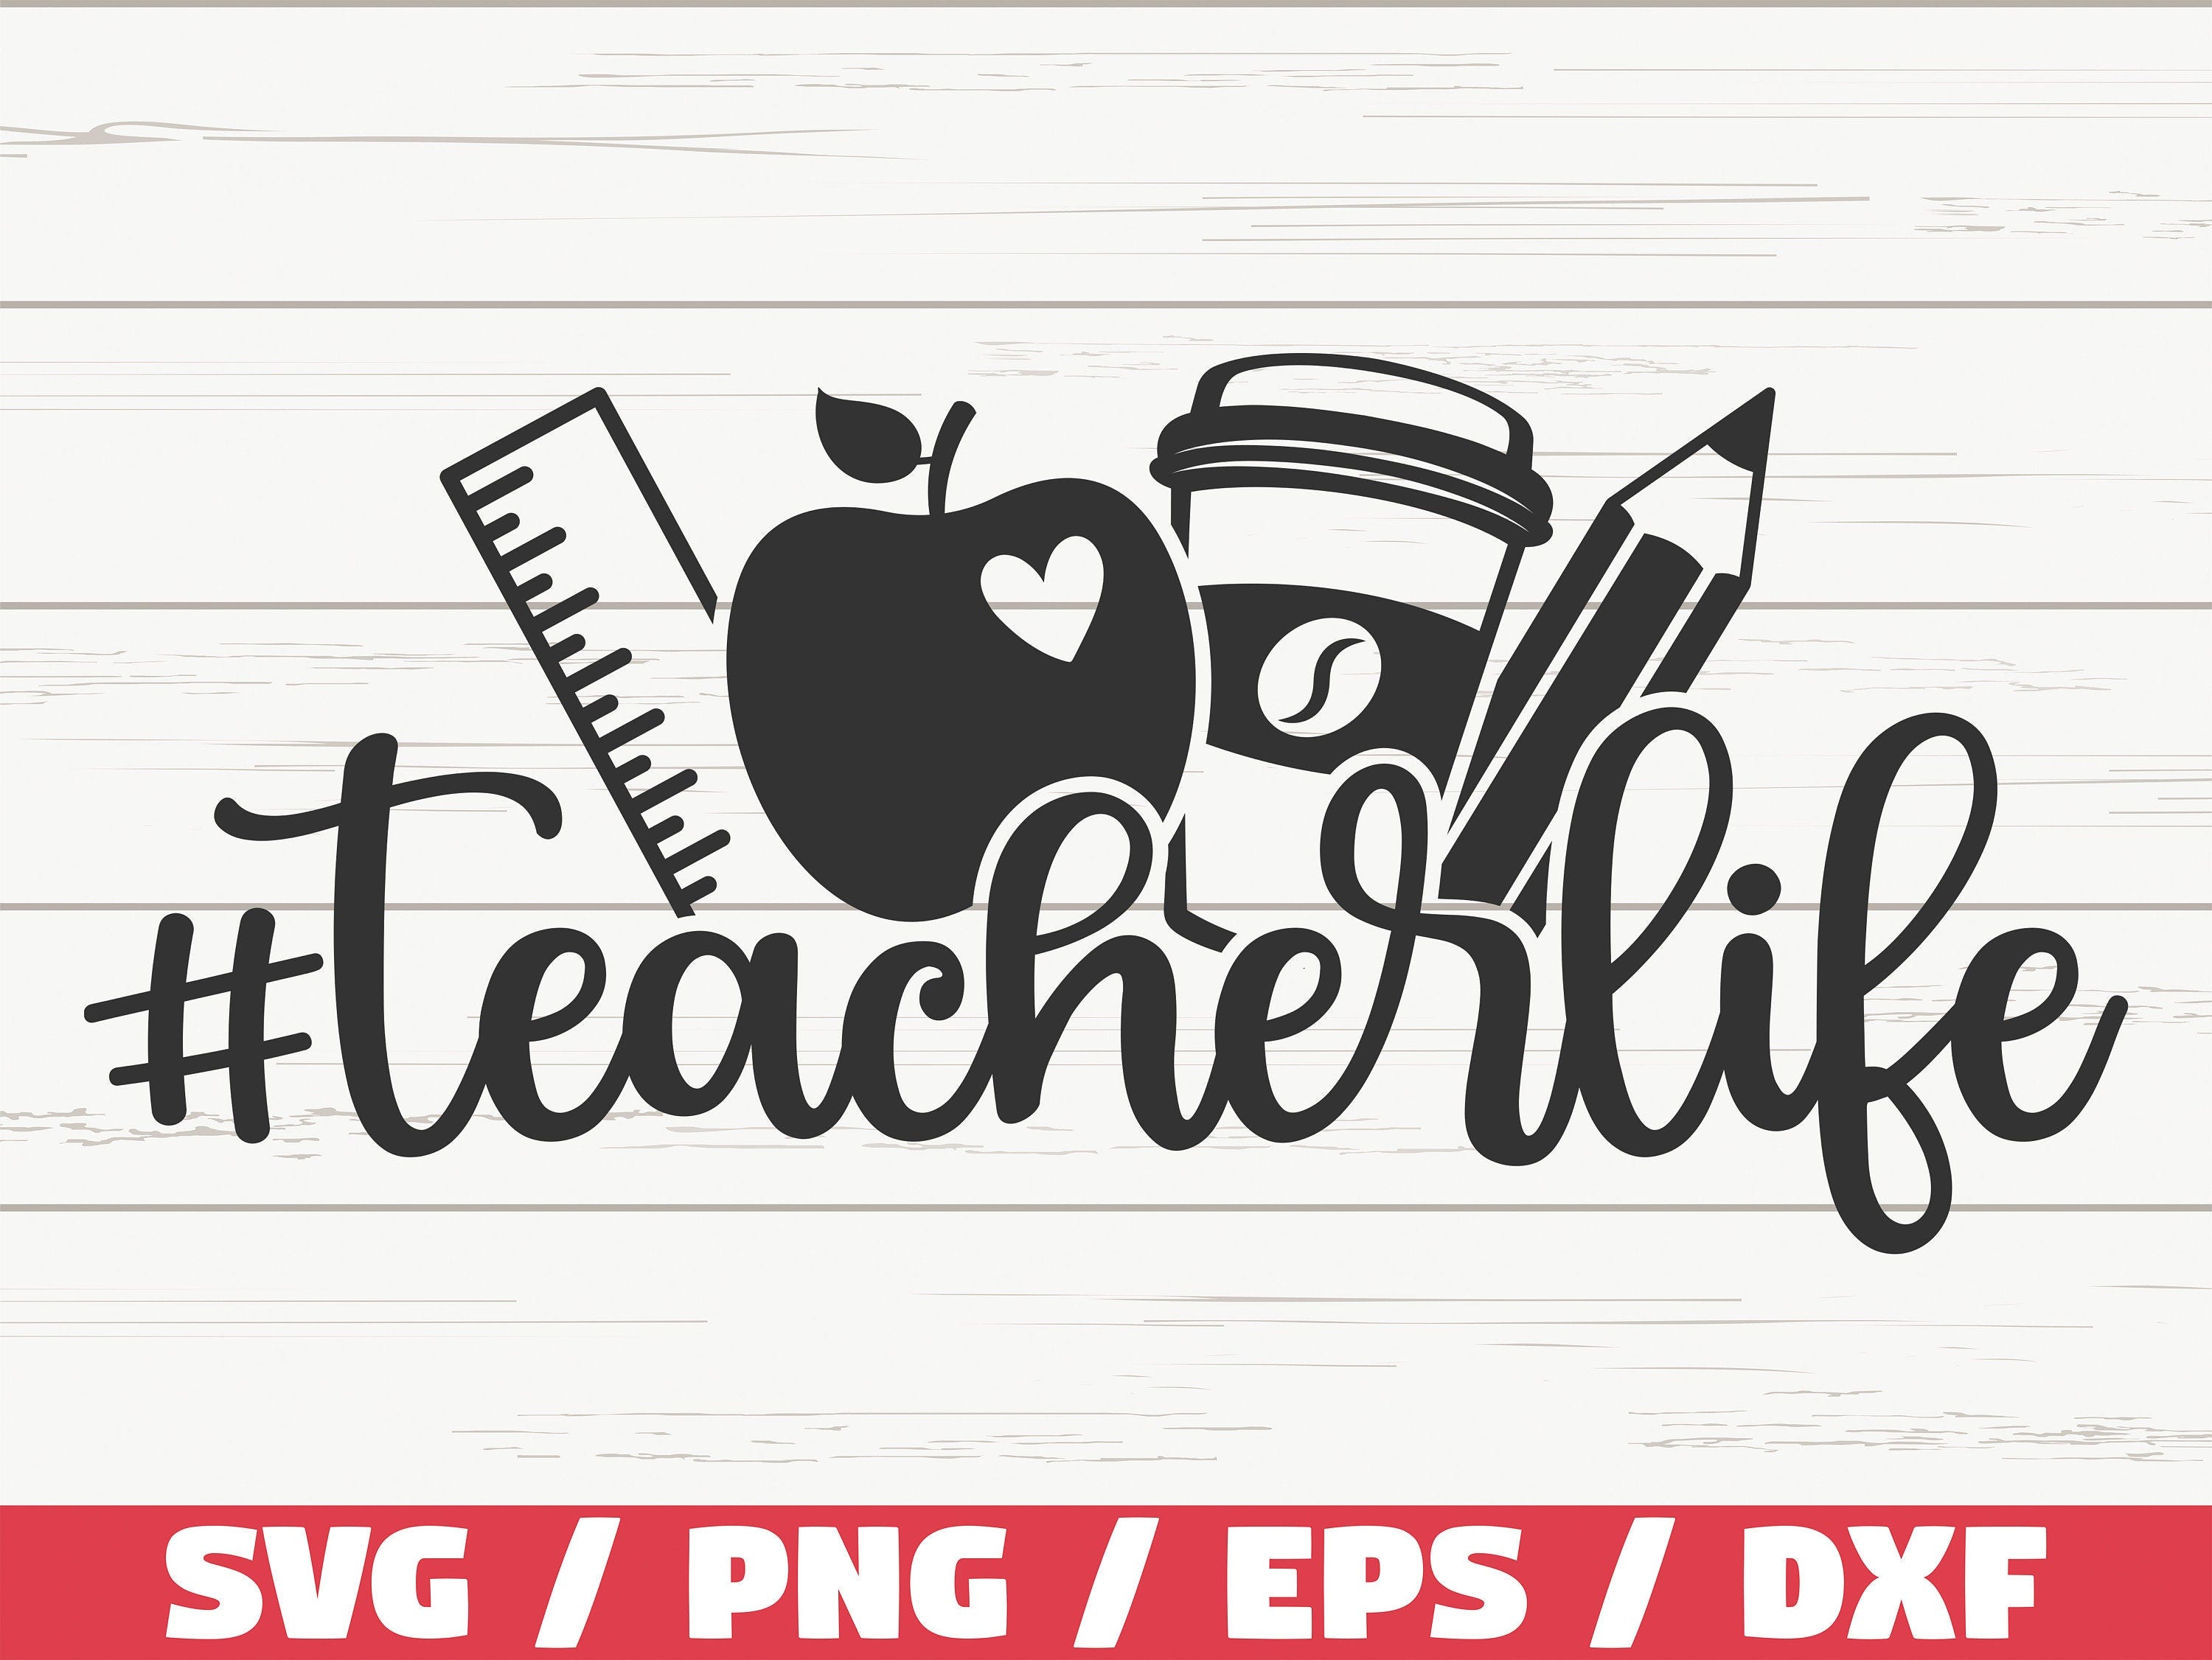 Teacher Life SVG / Cut File / Cricut / Commercial use / Silhouette / DXF file / Teacher Shirt / School SVG